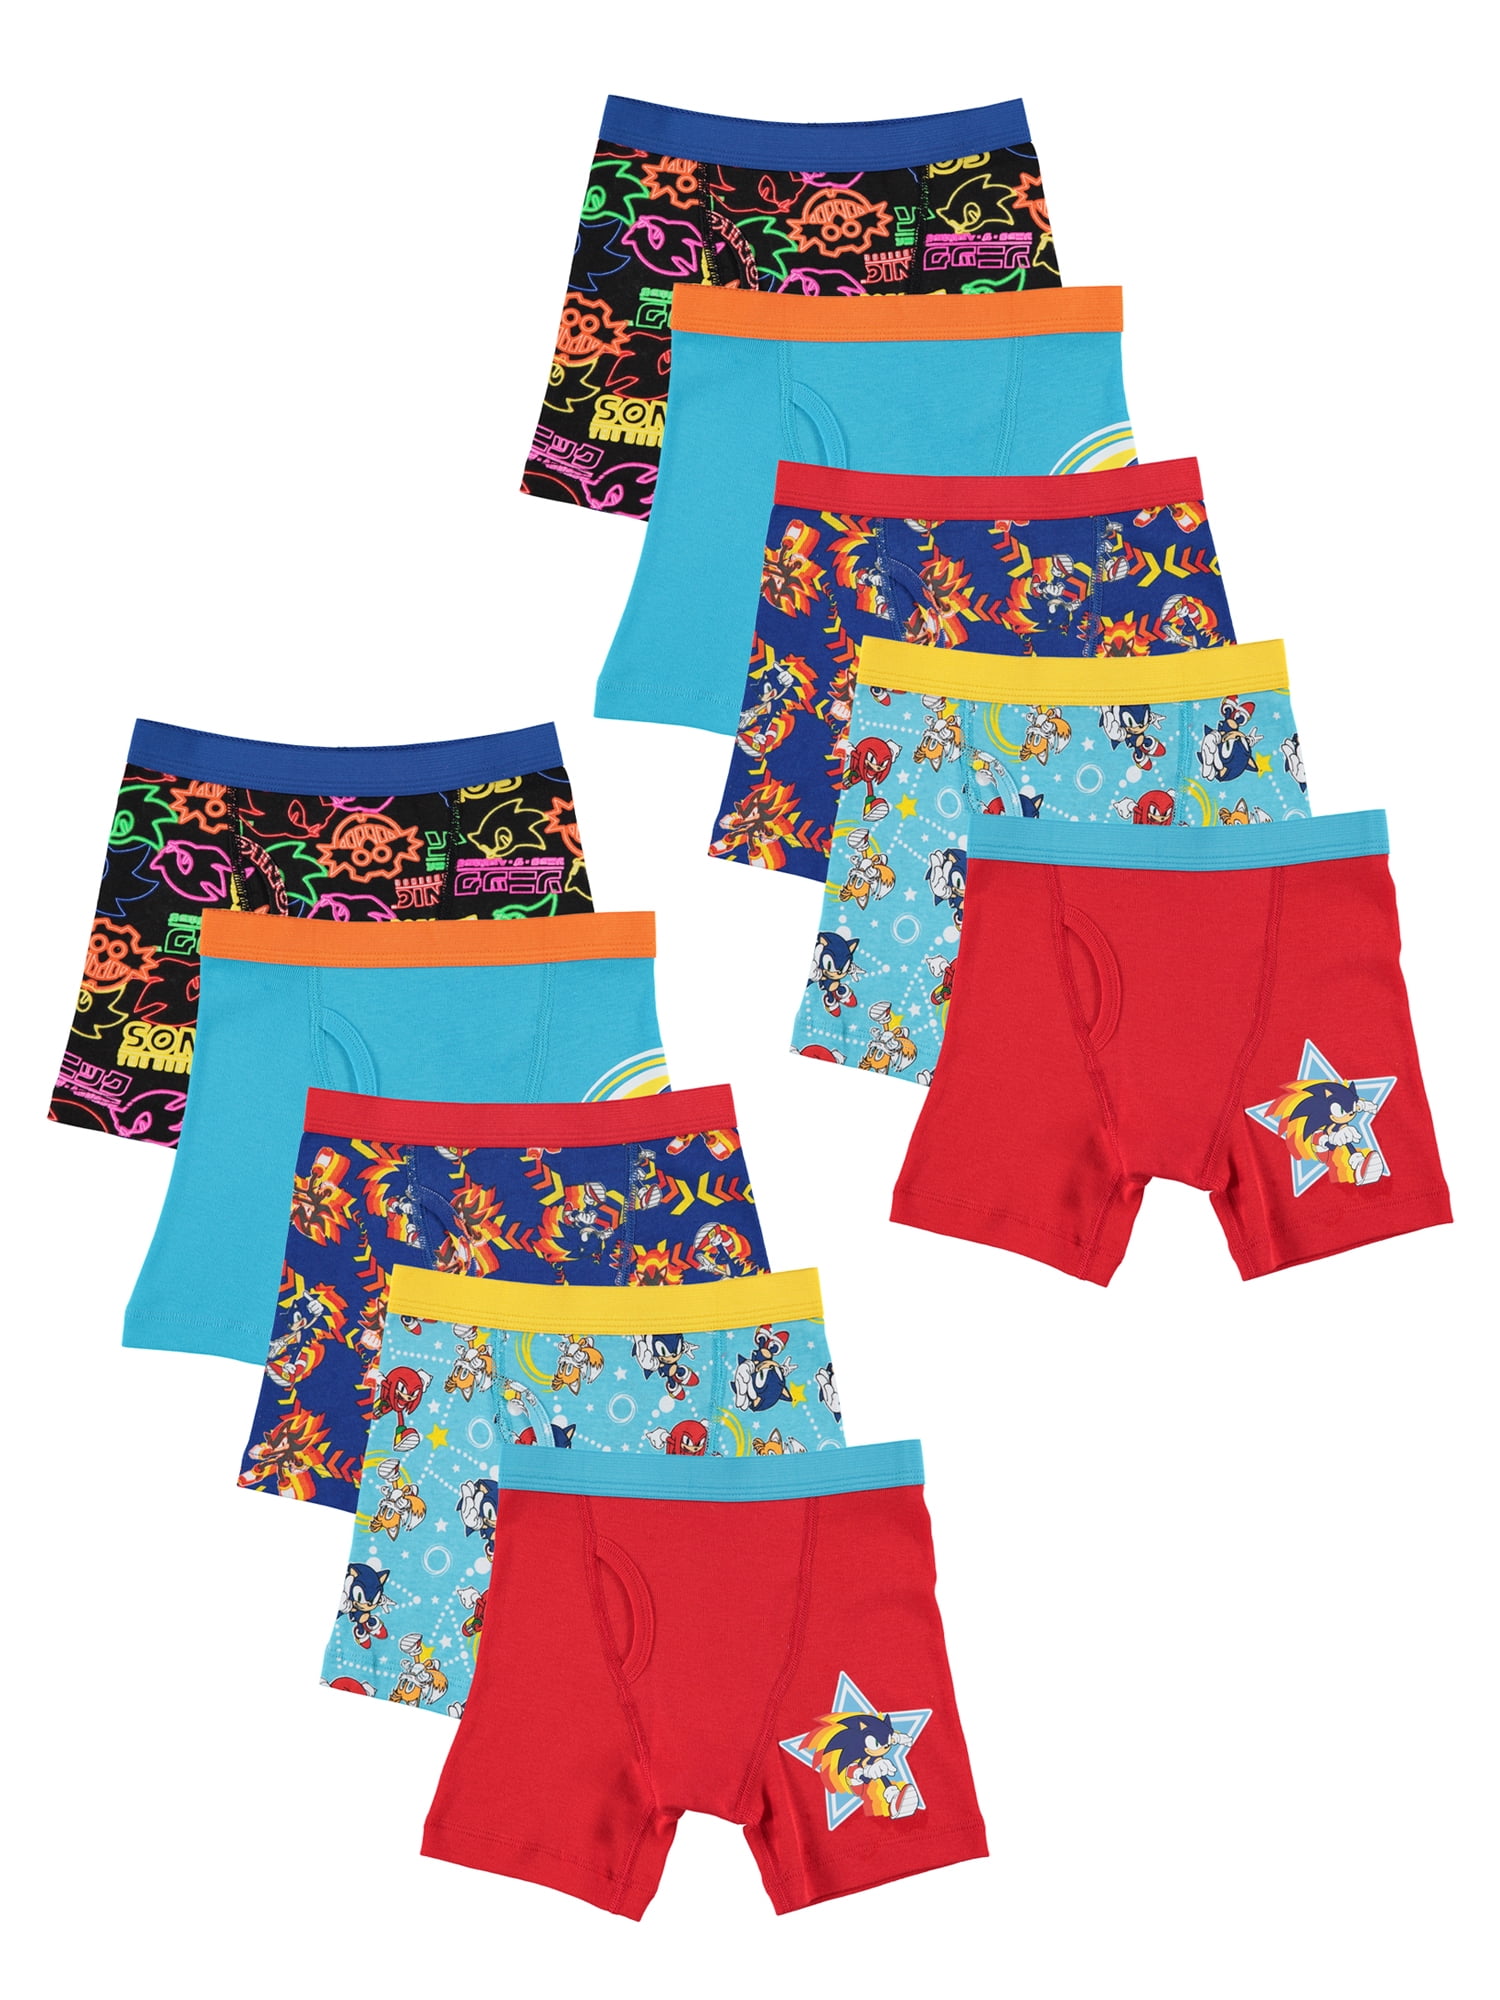 Sonic the Hedgehog Boys Underwear, 10 Pack Boxer Briefs Sizes 4-8